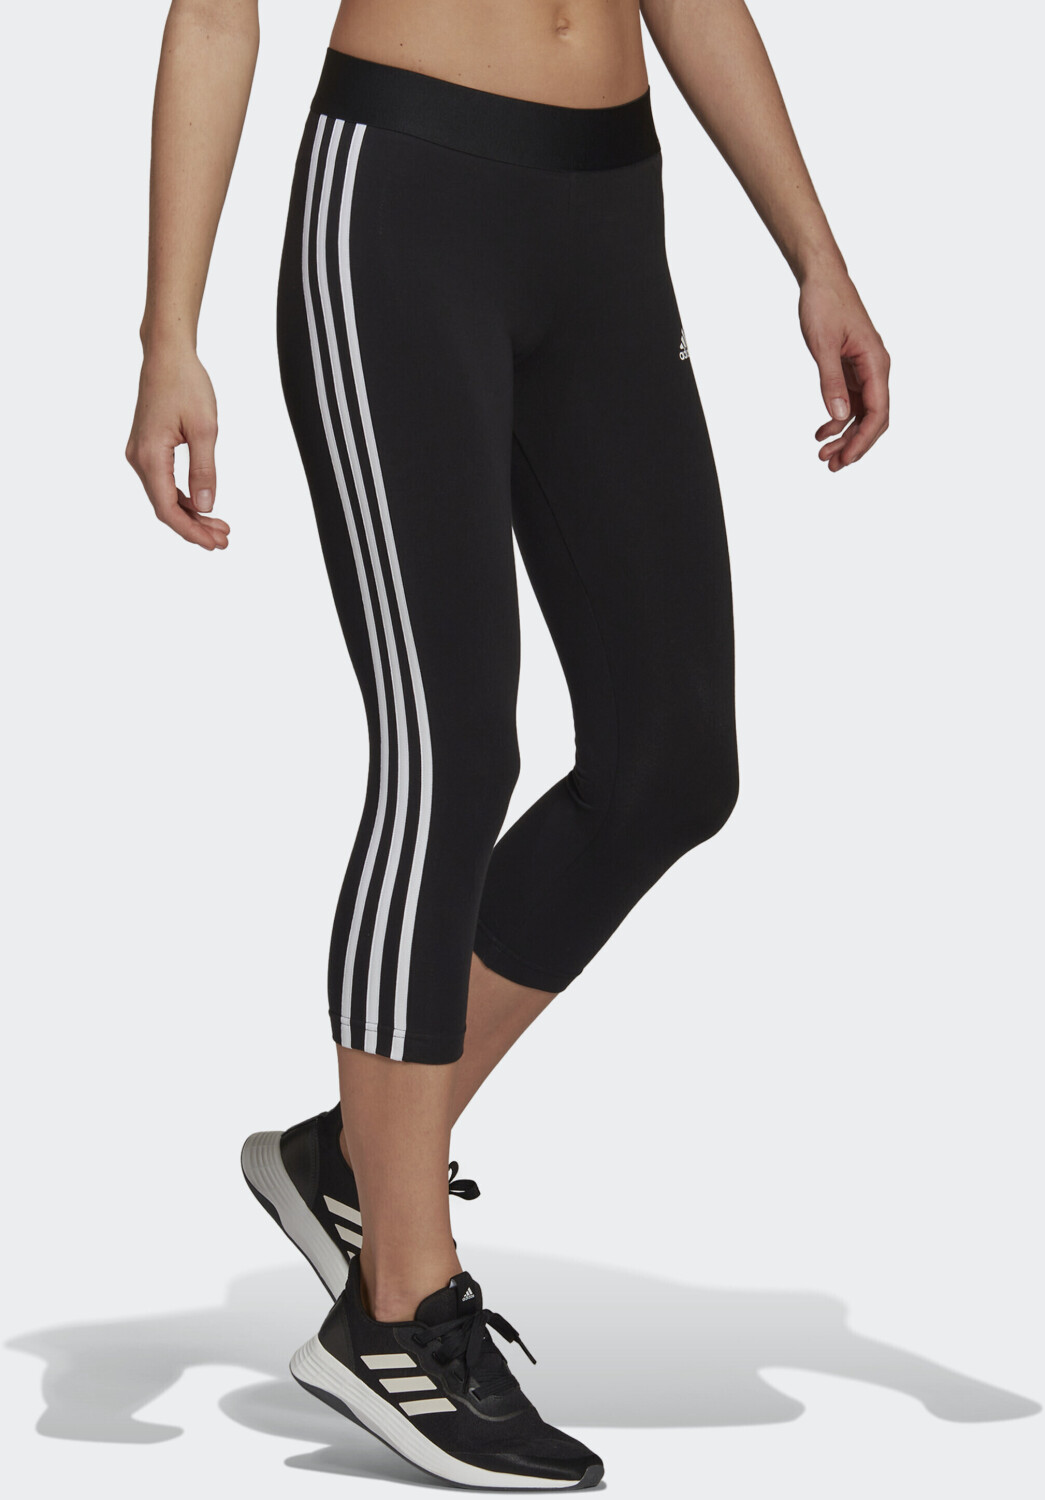 (HG5880) bei Woman € Adidas 3/4-Tight 19,99 black/white ab Preisvergleich | Essentials 3-Stripes